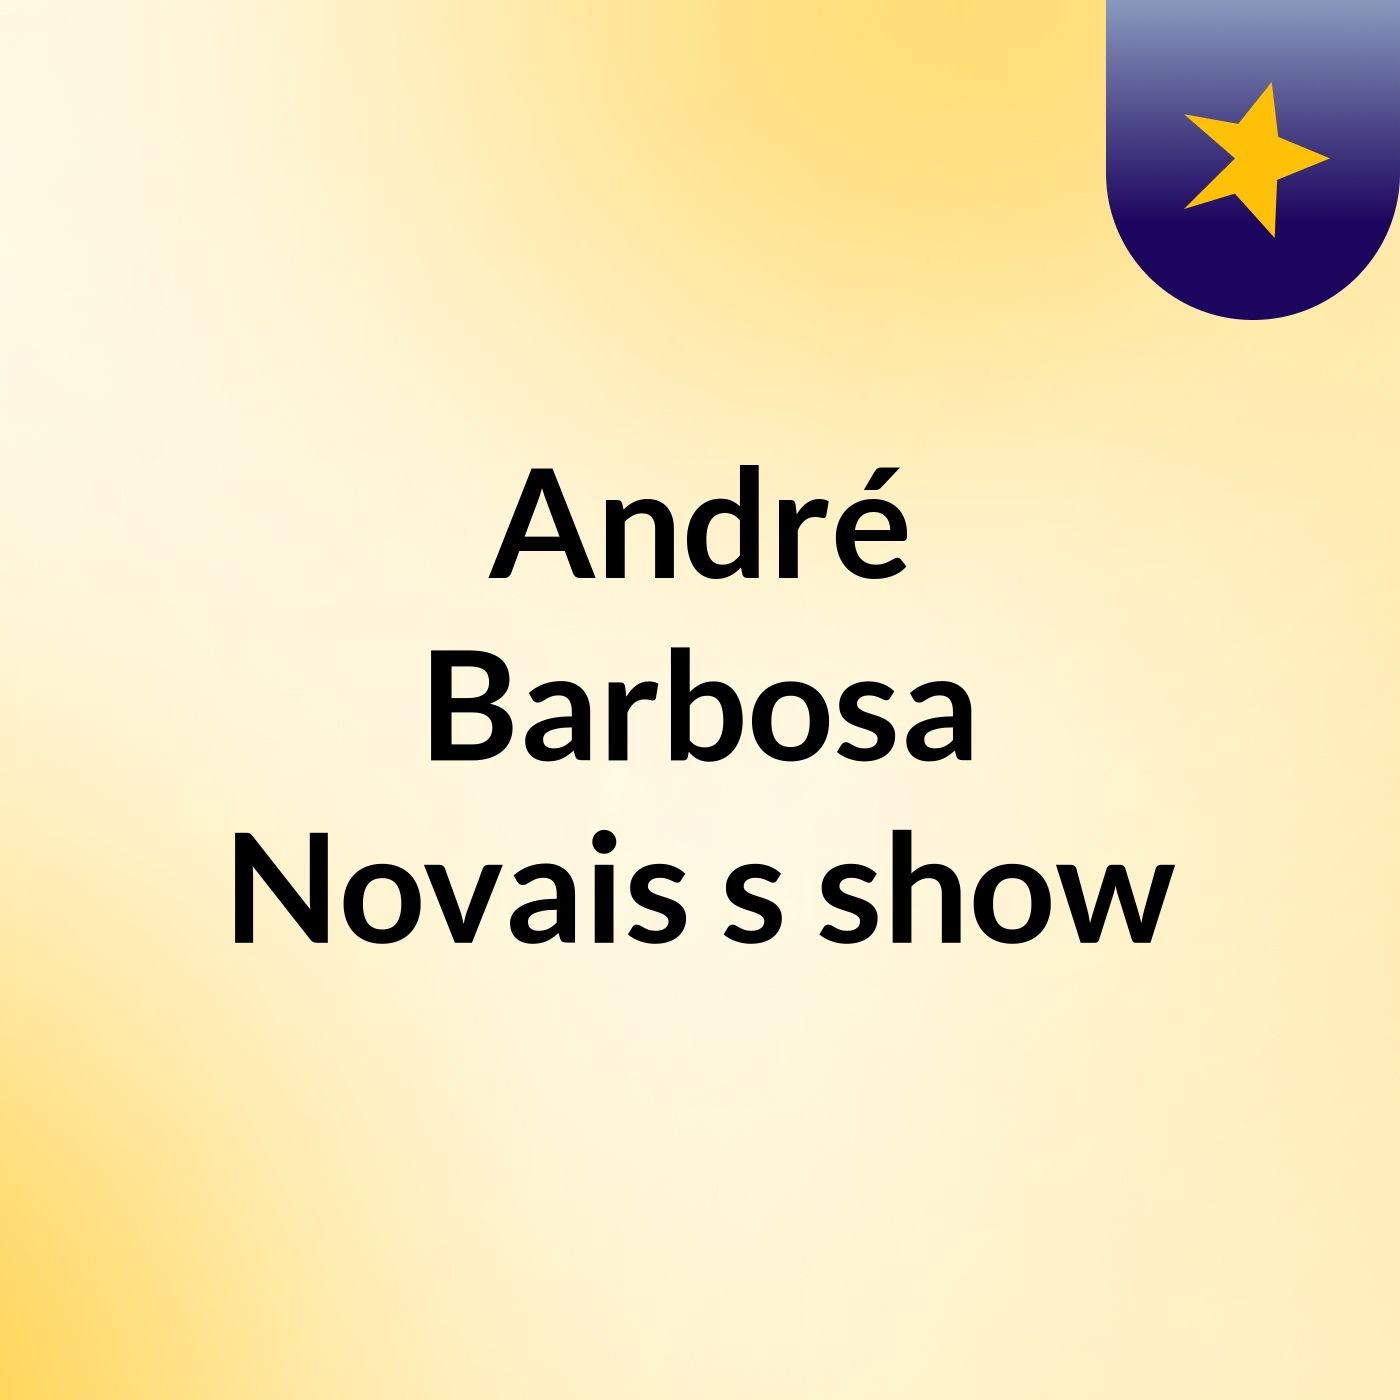 André Barbosa Novais's show